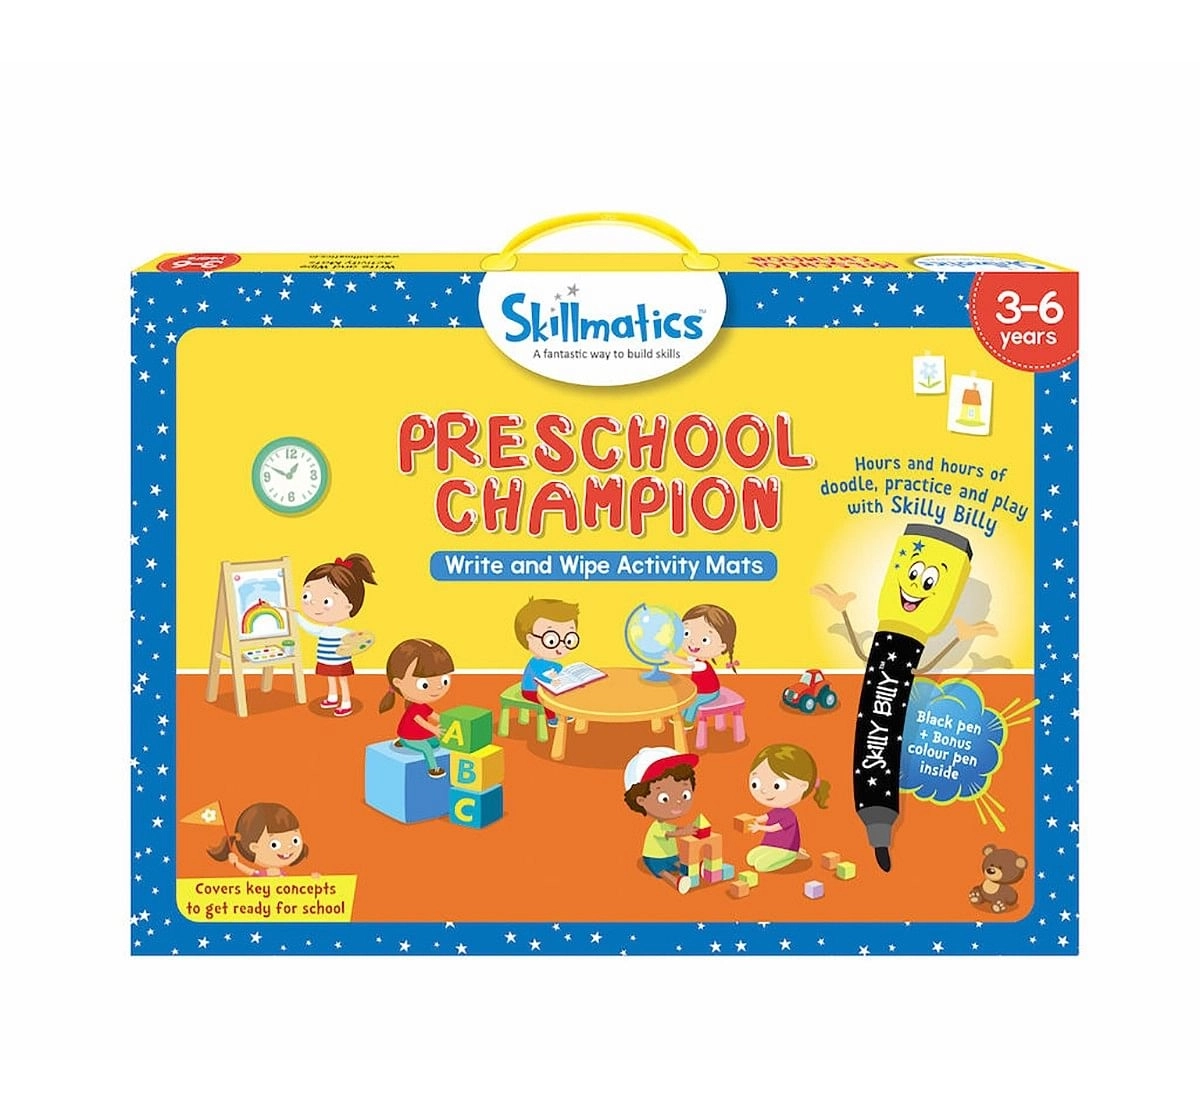  Skillmatics Preschool Champion  Games for Kids age 3Y+ 